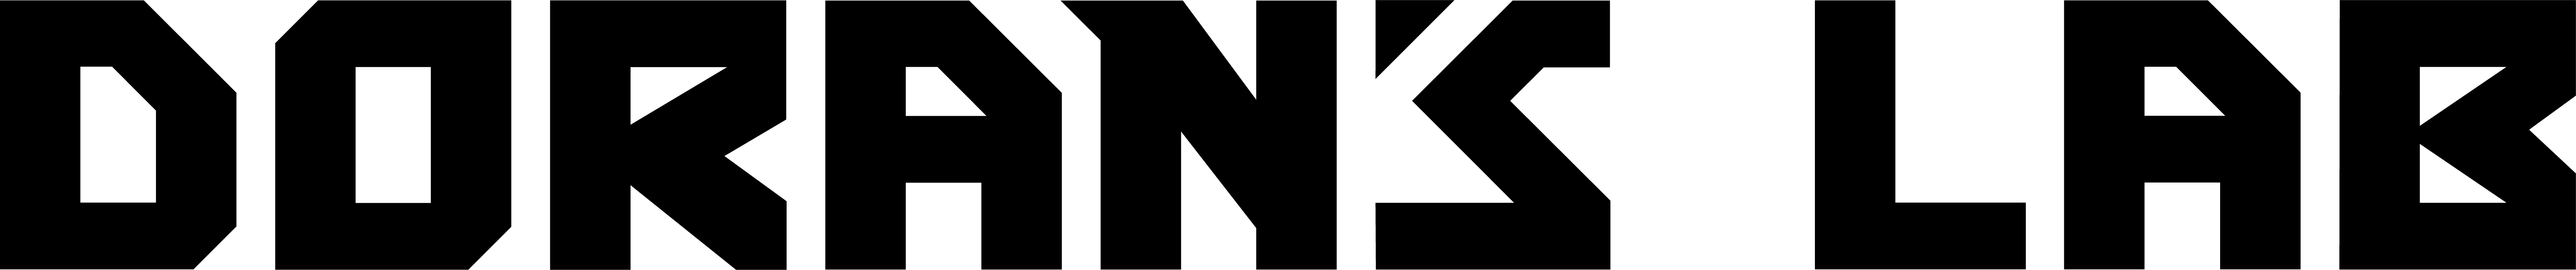 Doran's Lab logotype